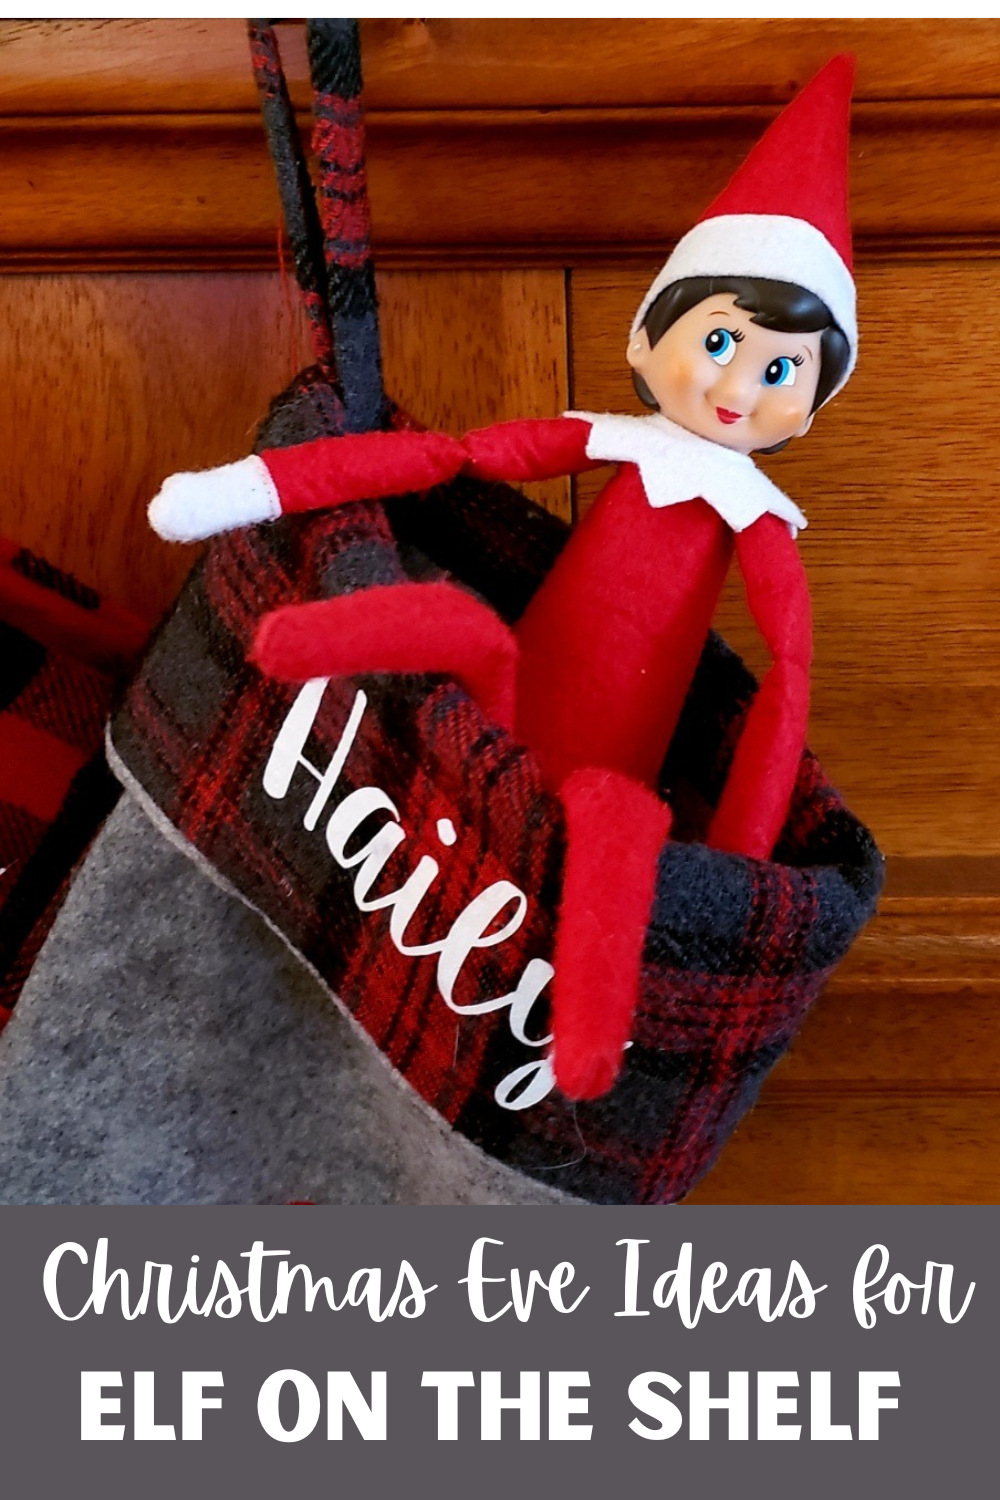 Elf on the Shelf Christmas Eve Ideas | Mom on the Side